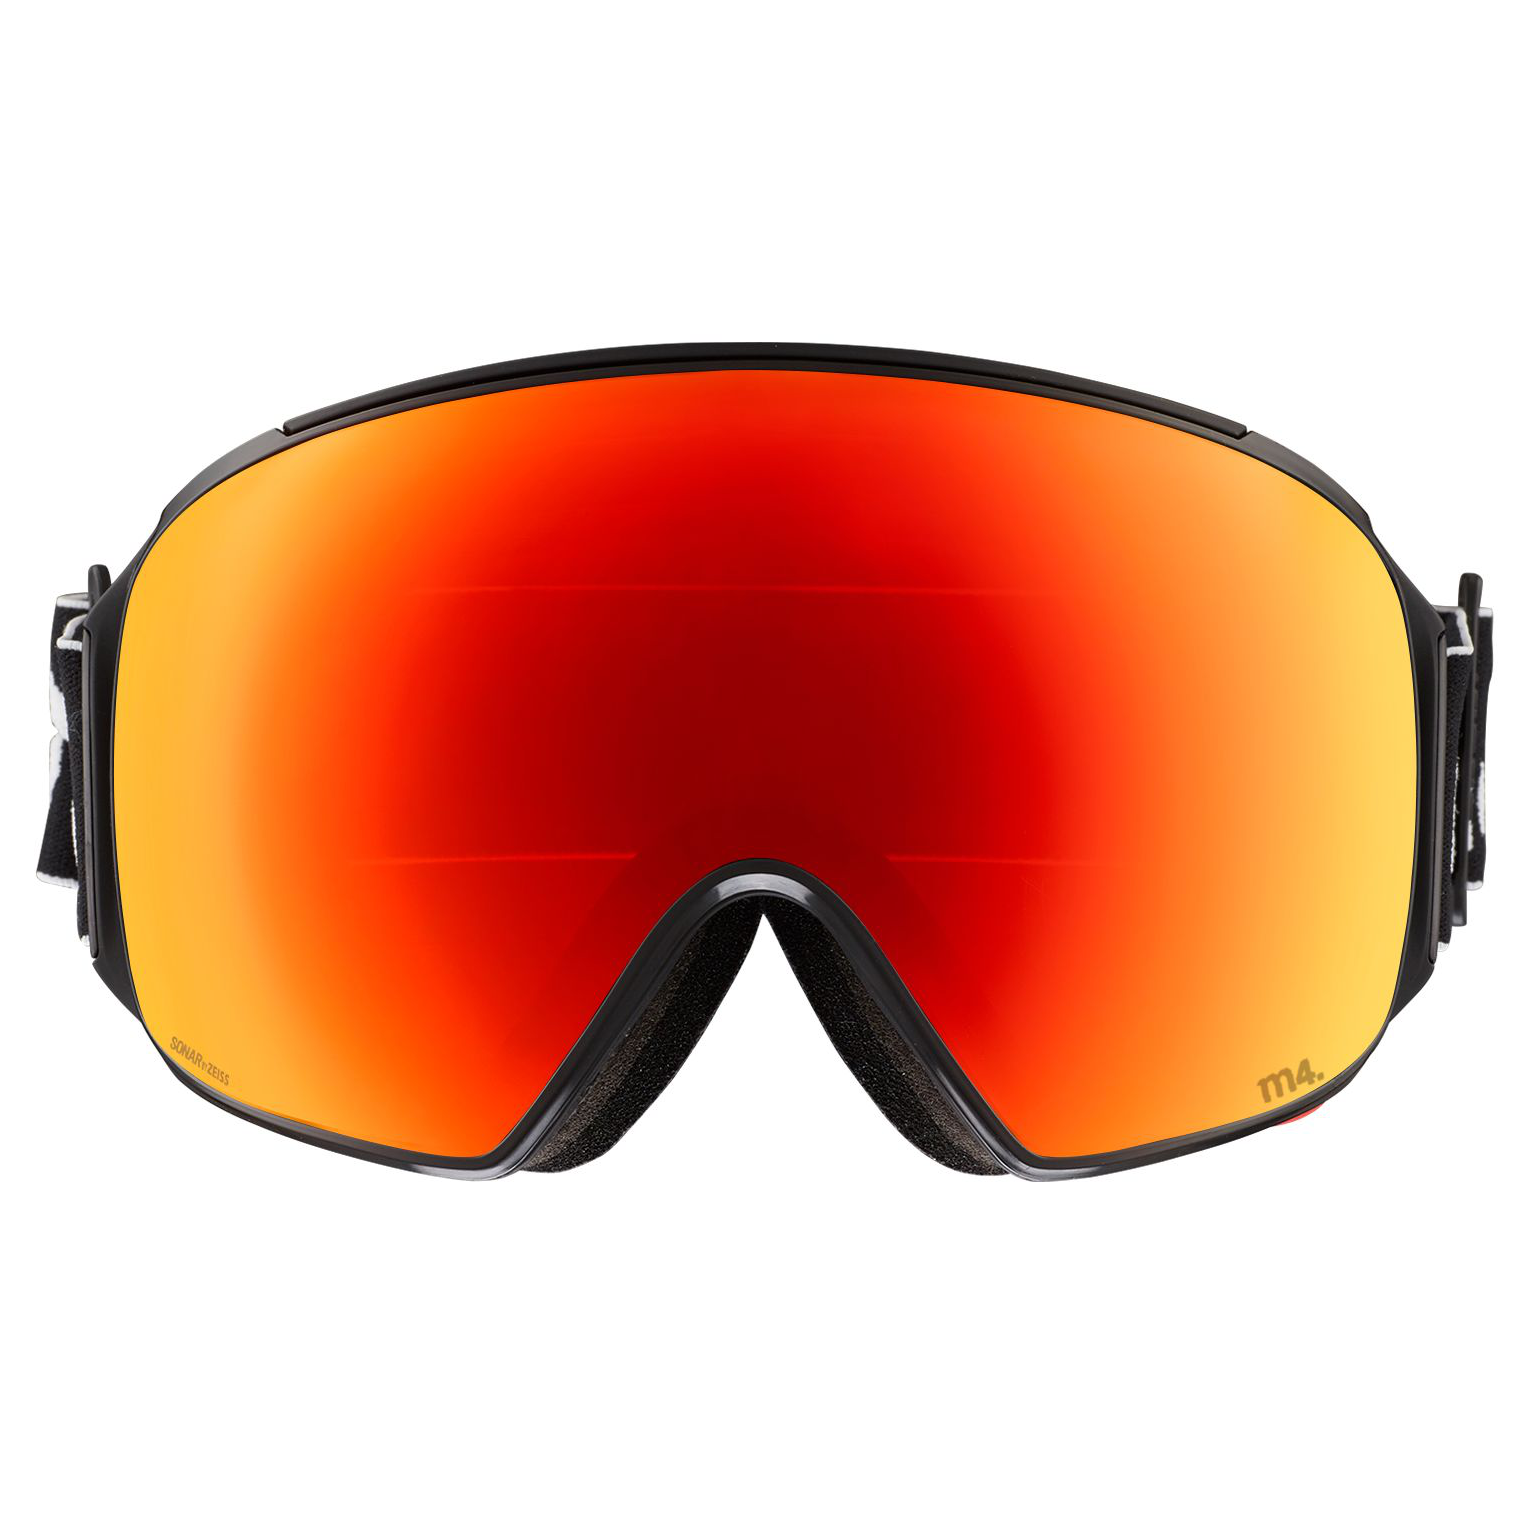 Masque de Ski M4 MFI Toric - Black - Sonar Red + Sonar Infrared Blue